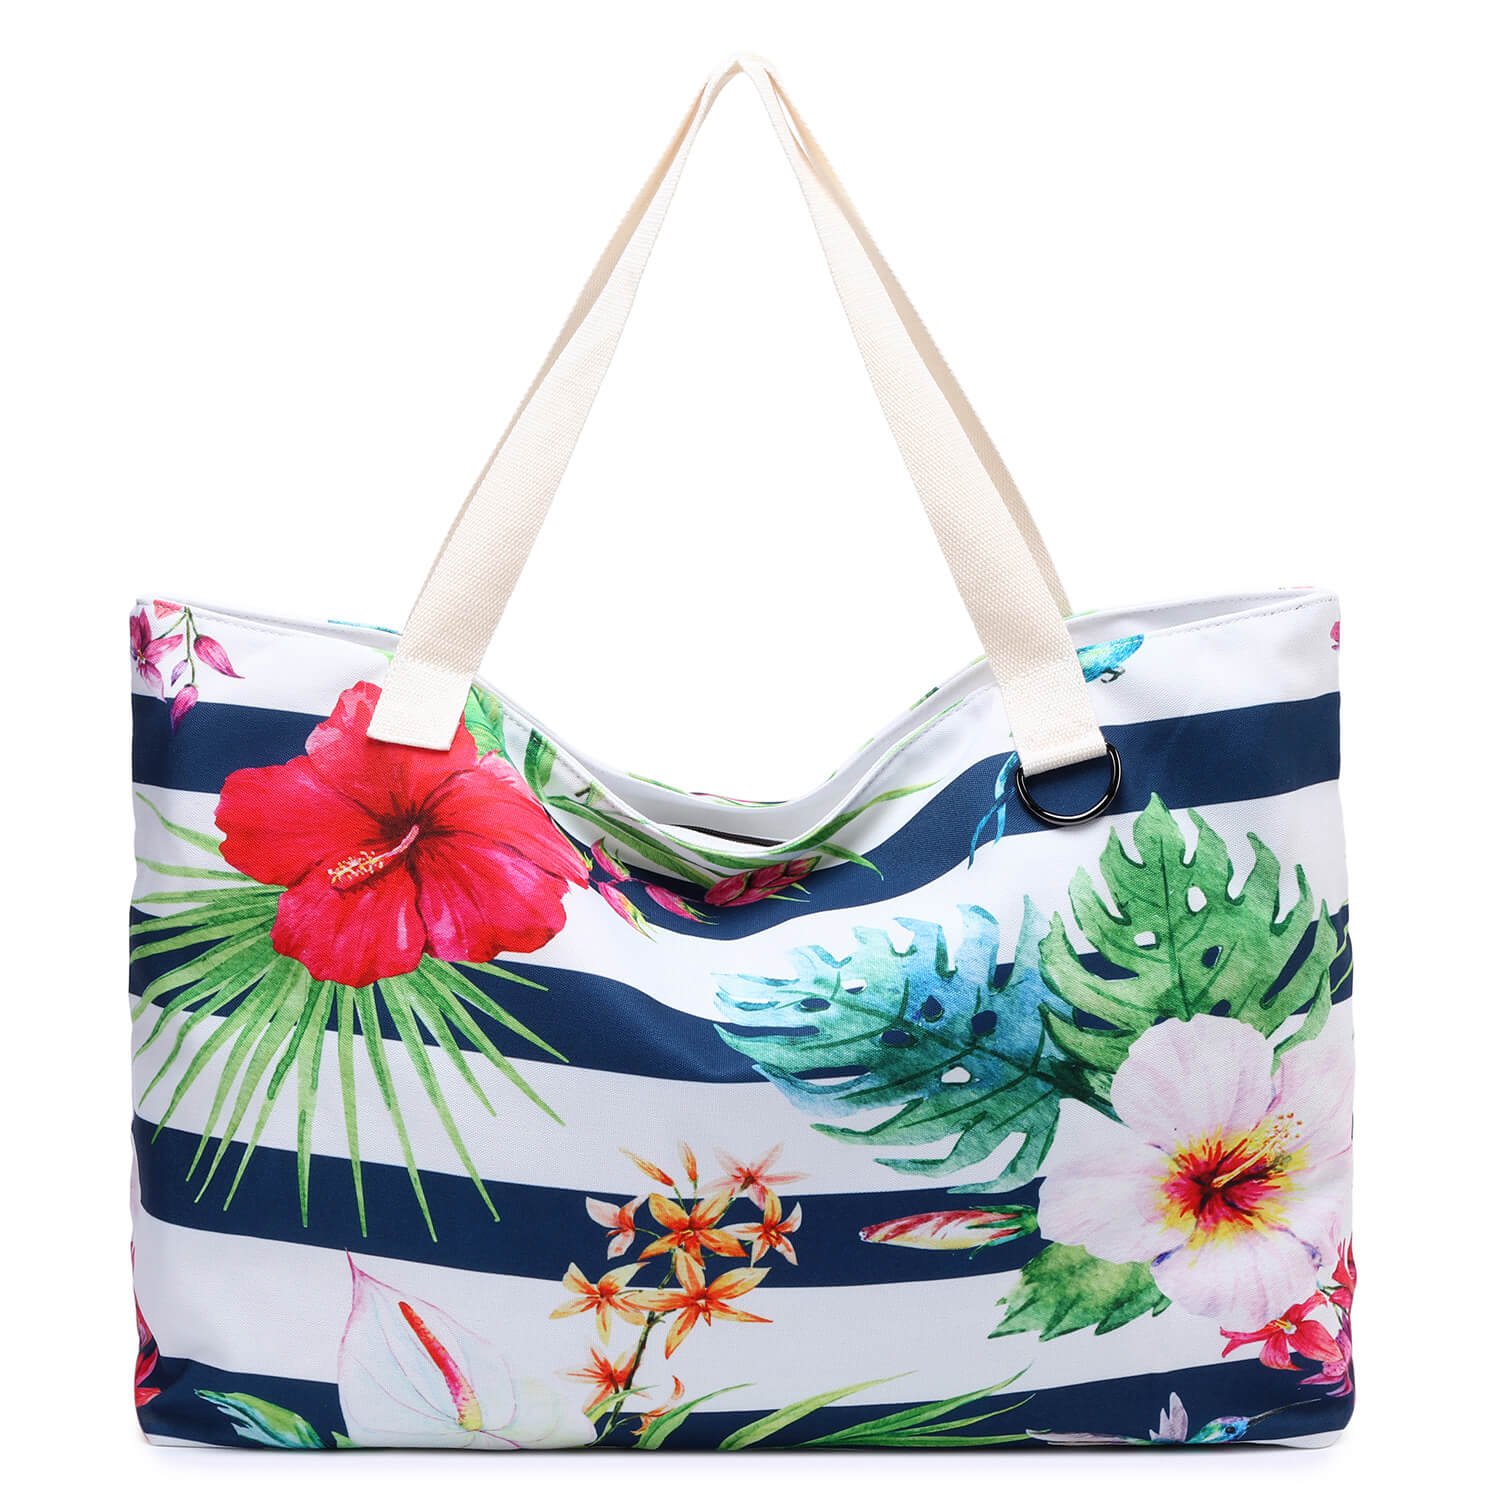 Pink Seahorse Tote Bag| Personalized Kids Totes | Custom Beach Bags